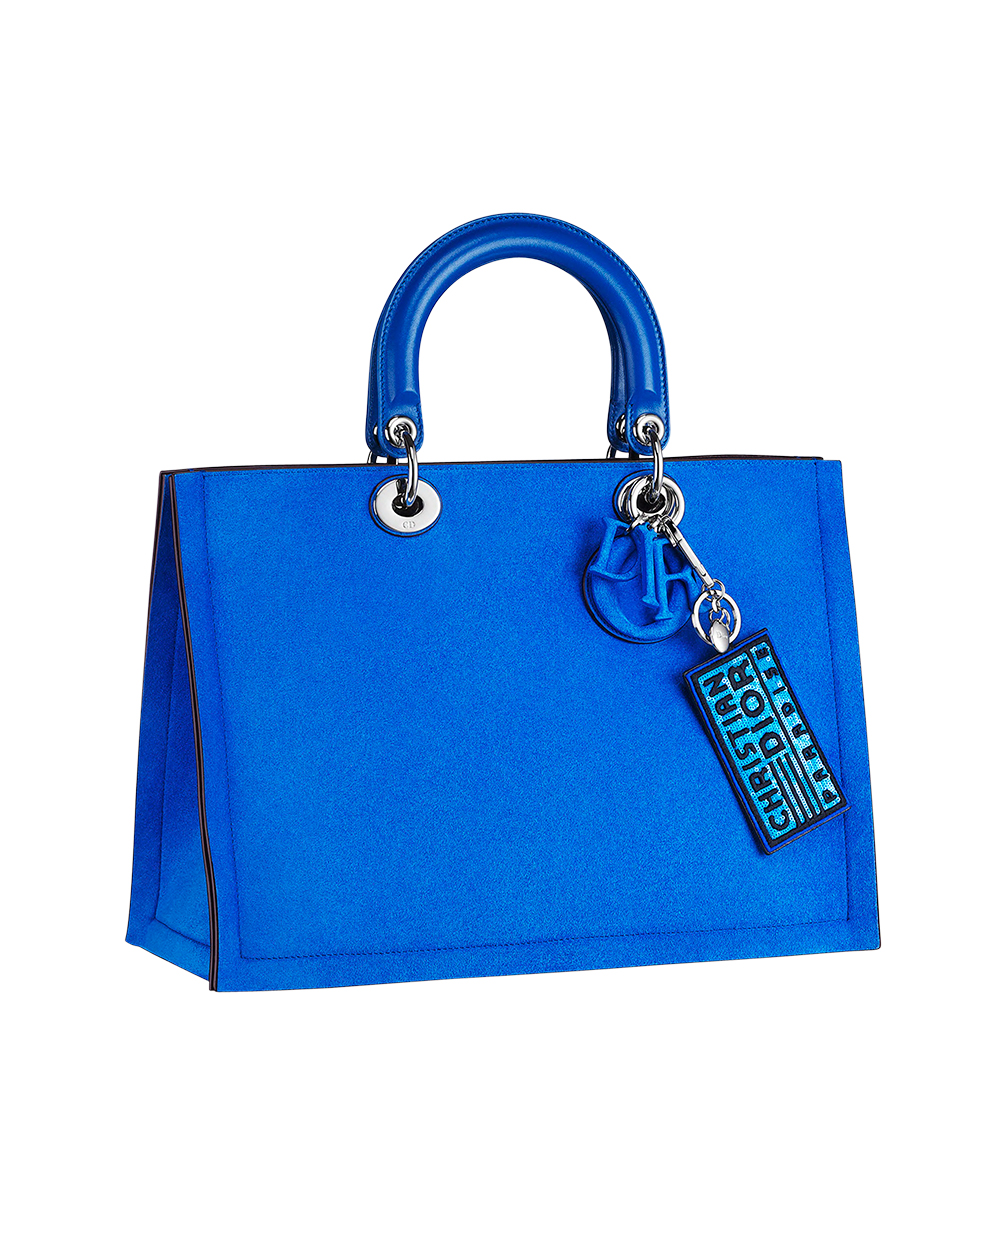 Christian Dior bag, $6800